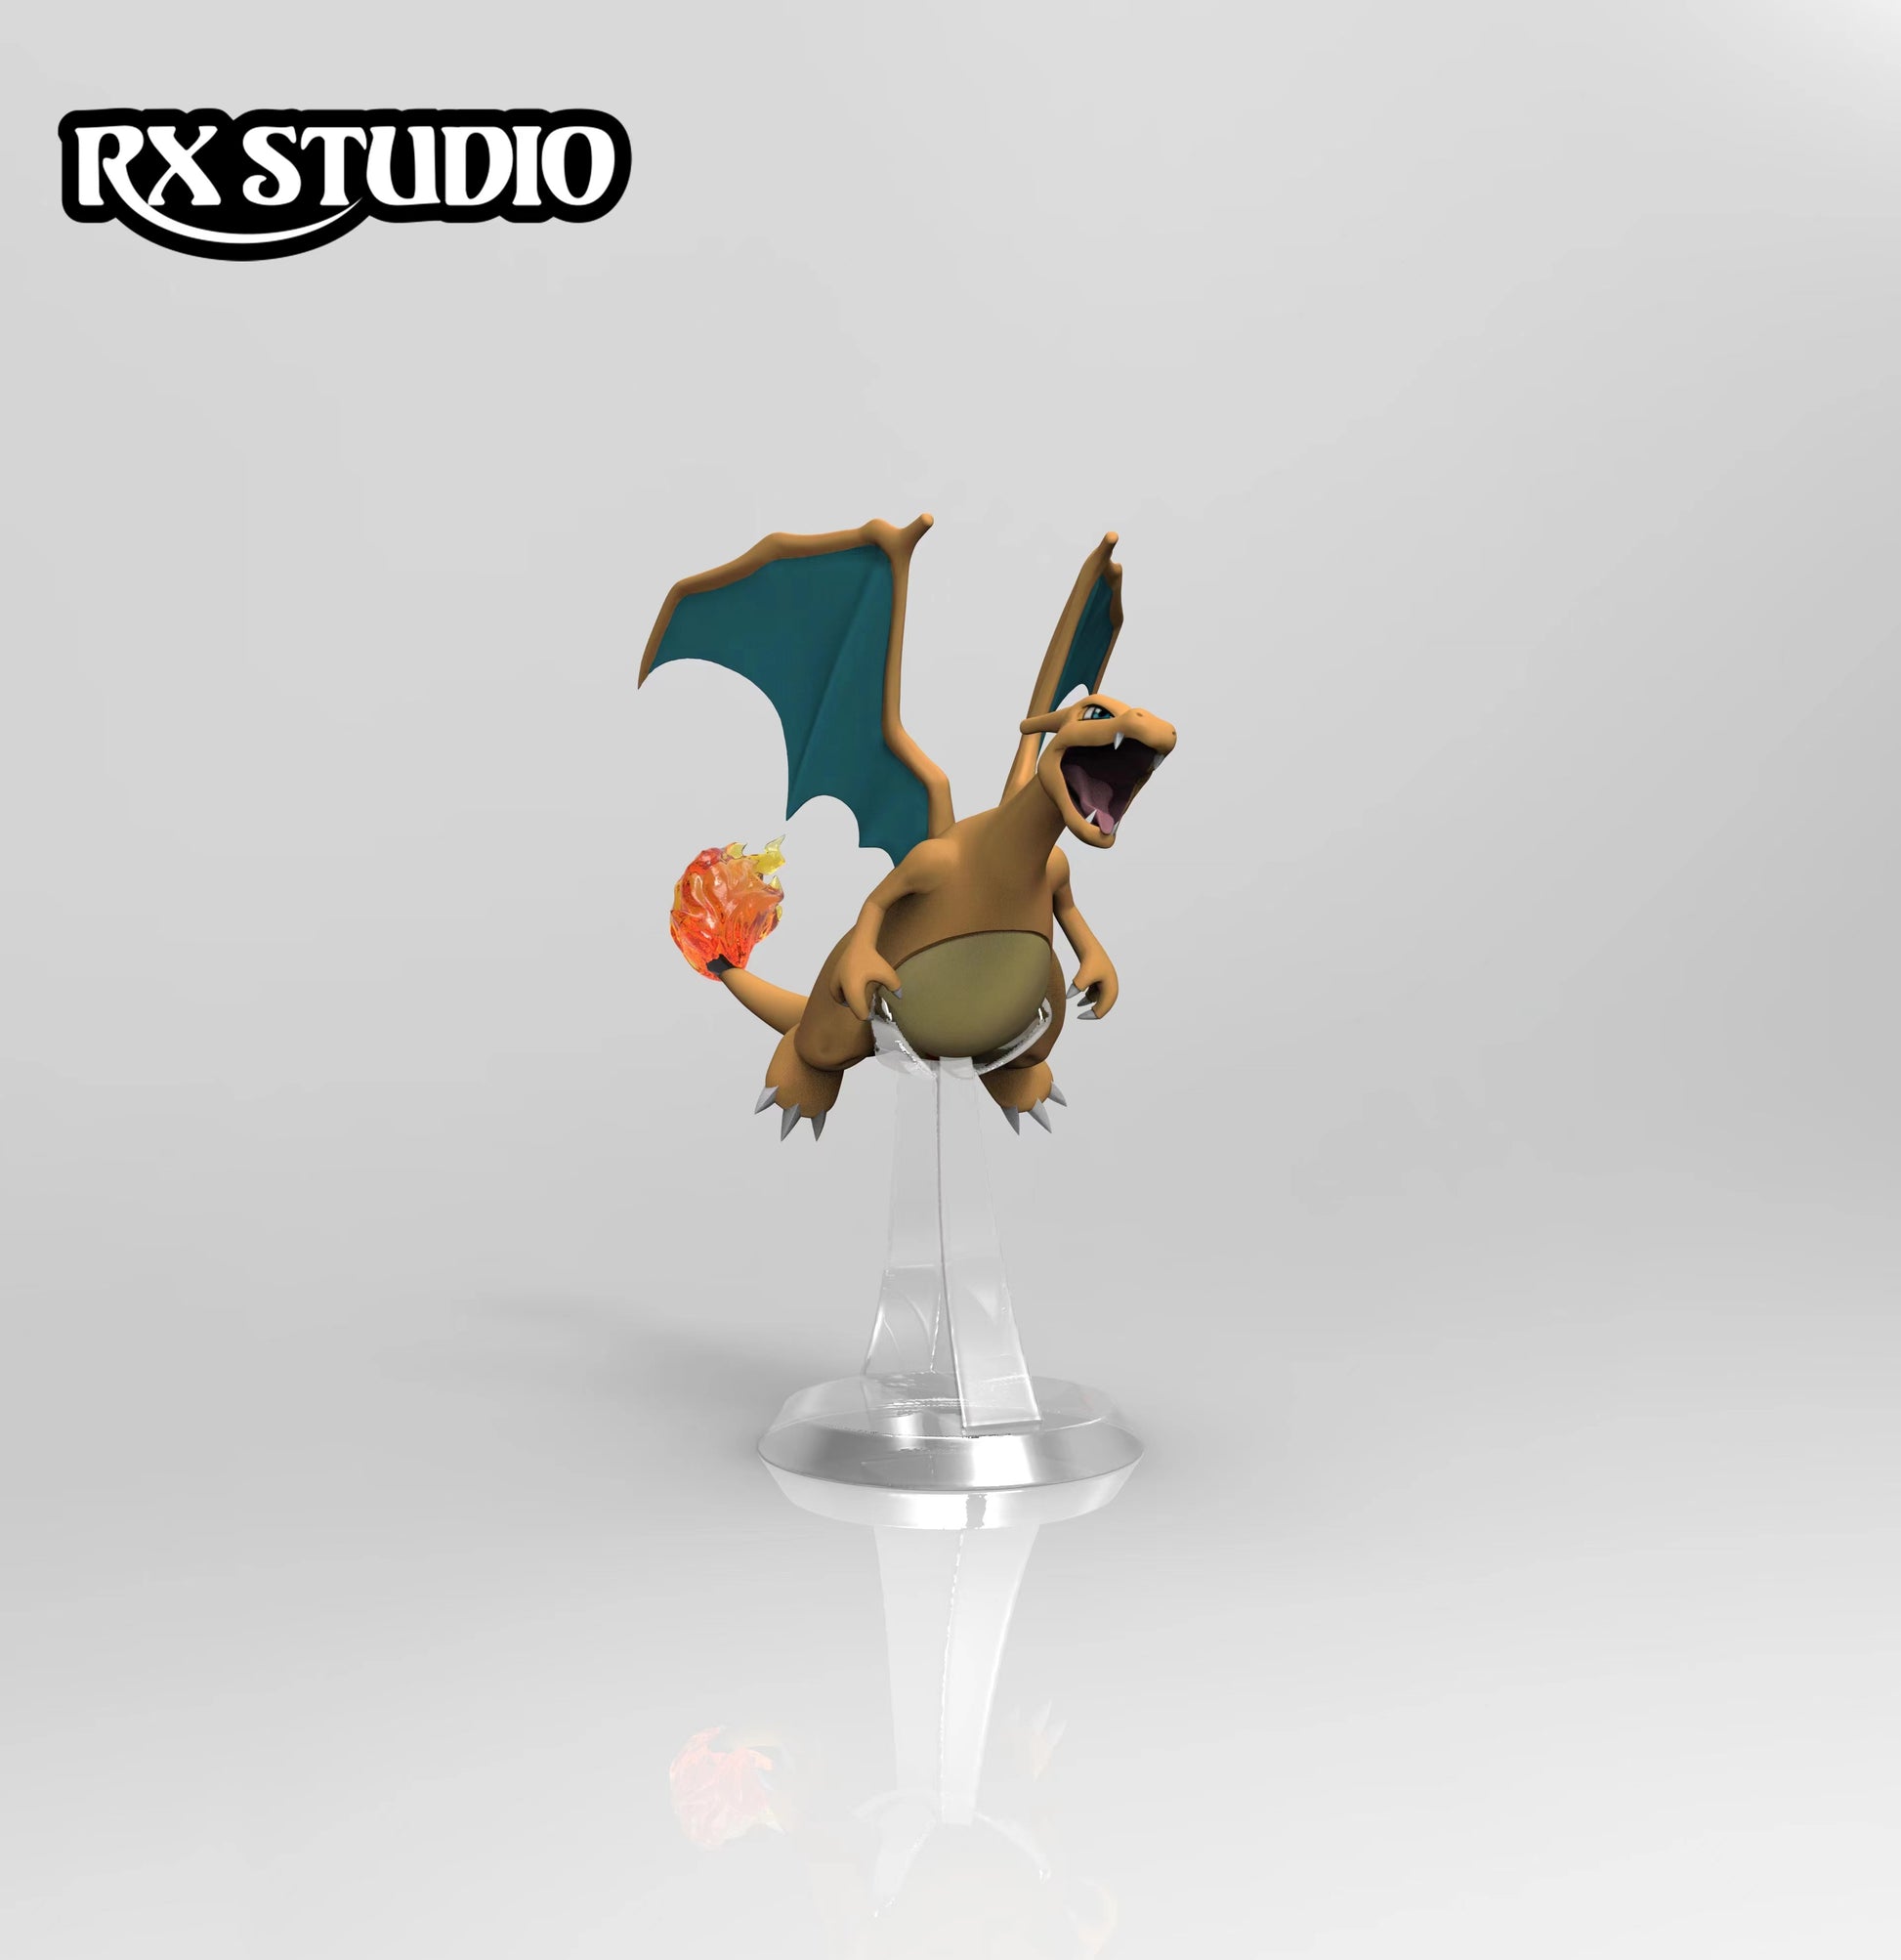 Make Up The Balance〗Pokemon Scale World Shiny Charizard #006 1:20